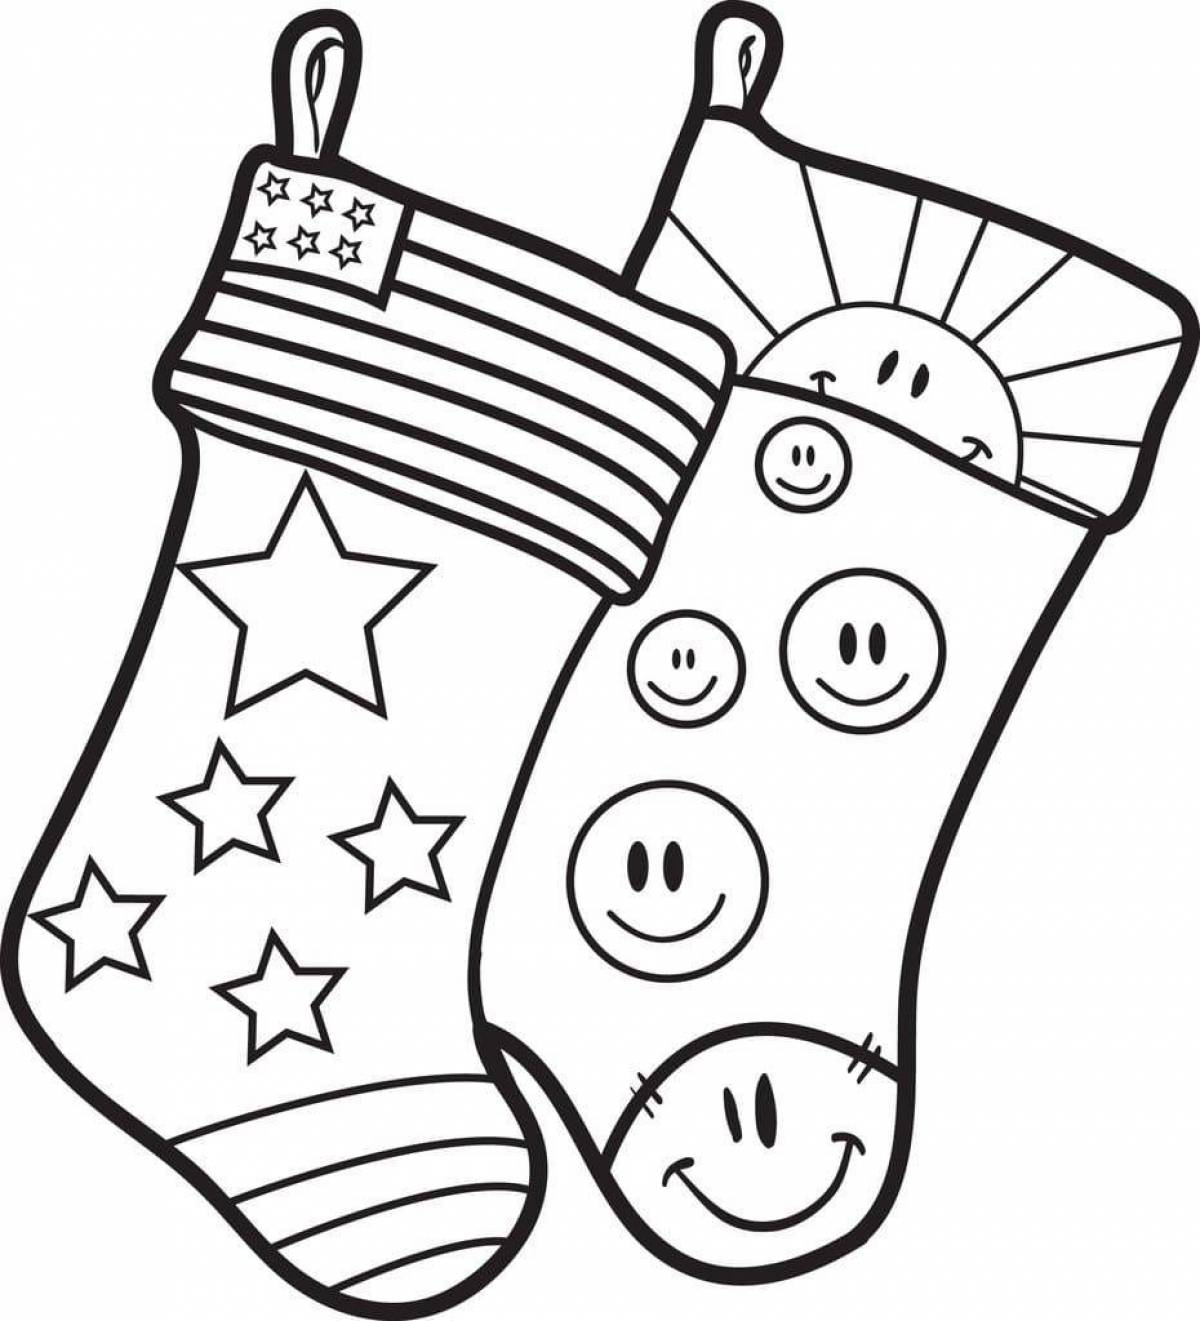 Adorable Christmas sock coloring page